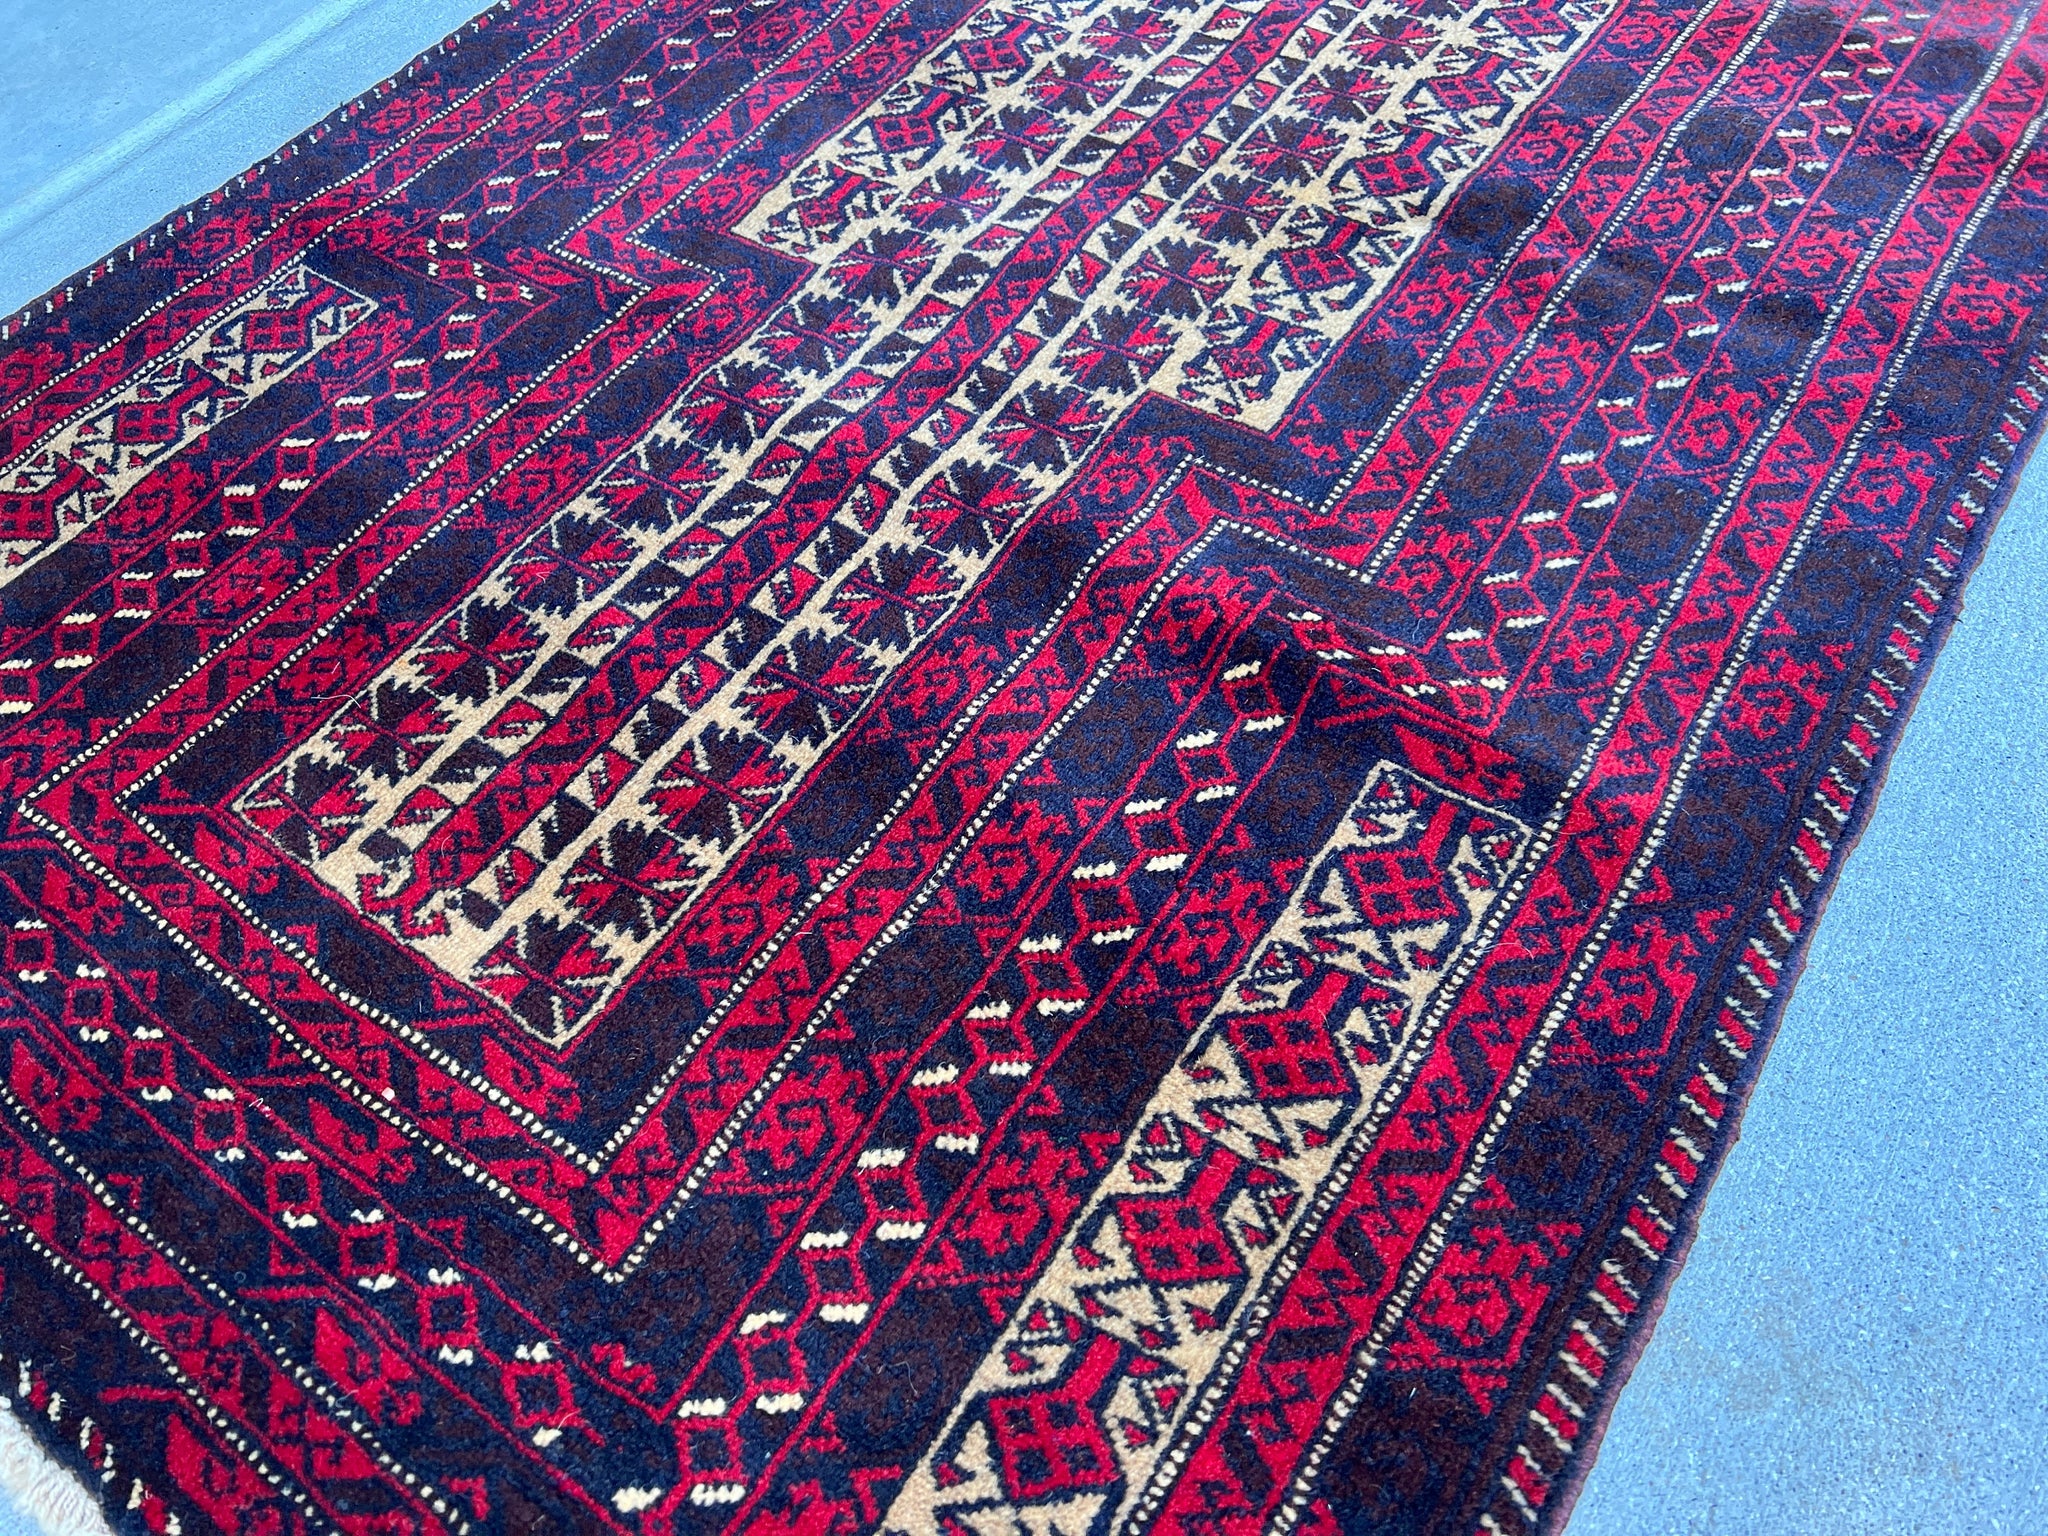 3x5 (100x180) Handmade Vintage Baluch Afghan Rug Blood Red Black Cream Beige Hand Knotted Oriental Turkish Wool Persian Bohemian /Geometric